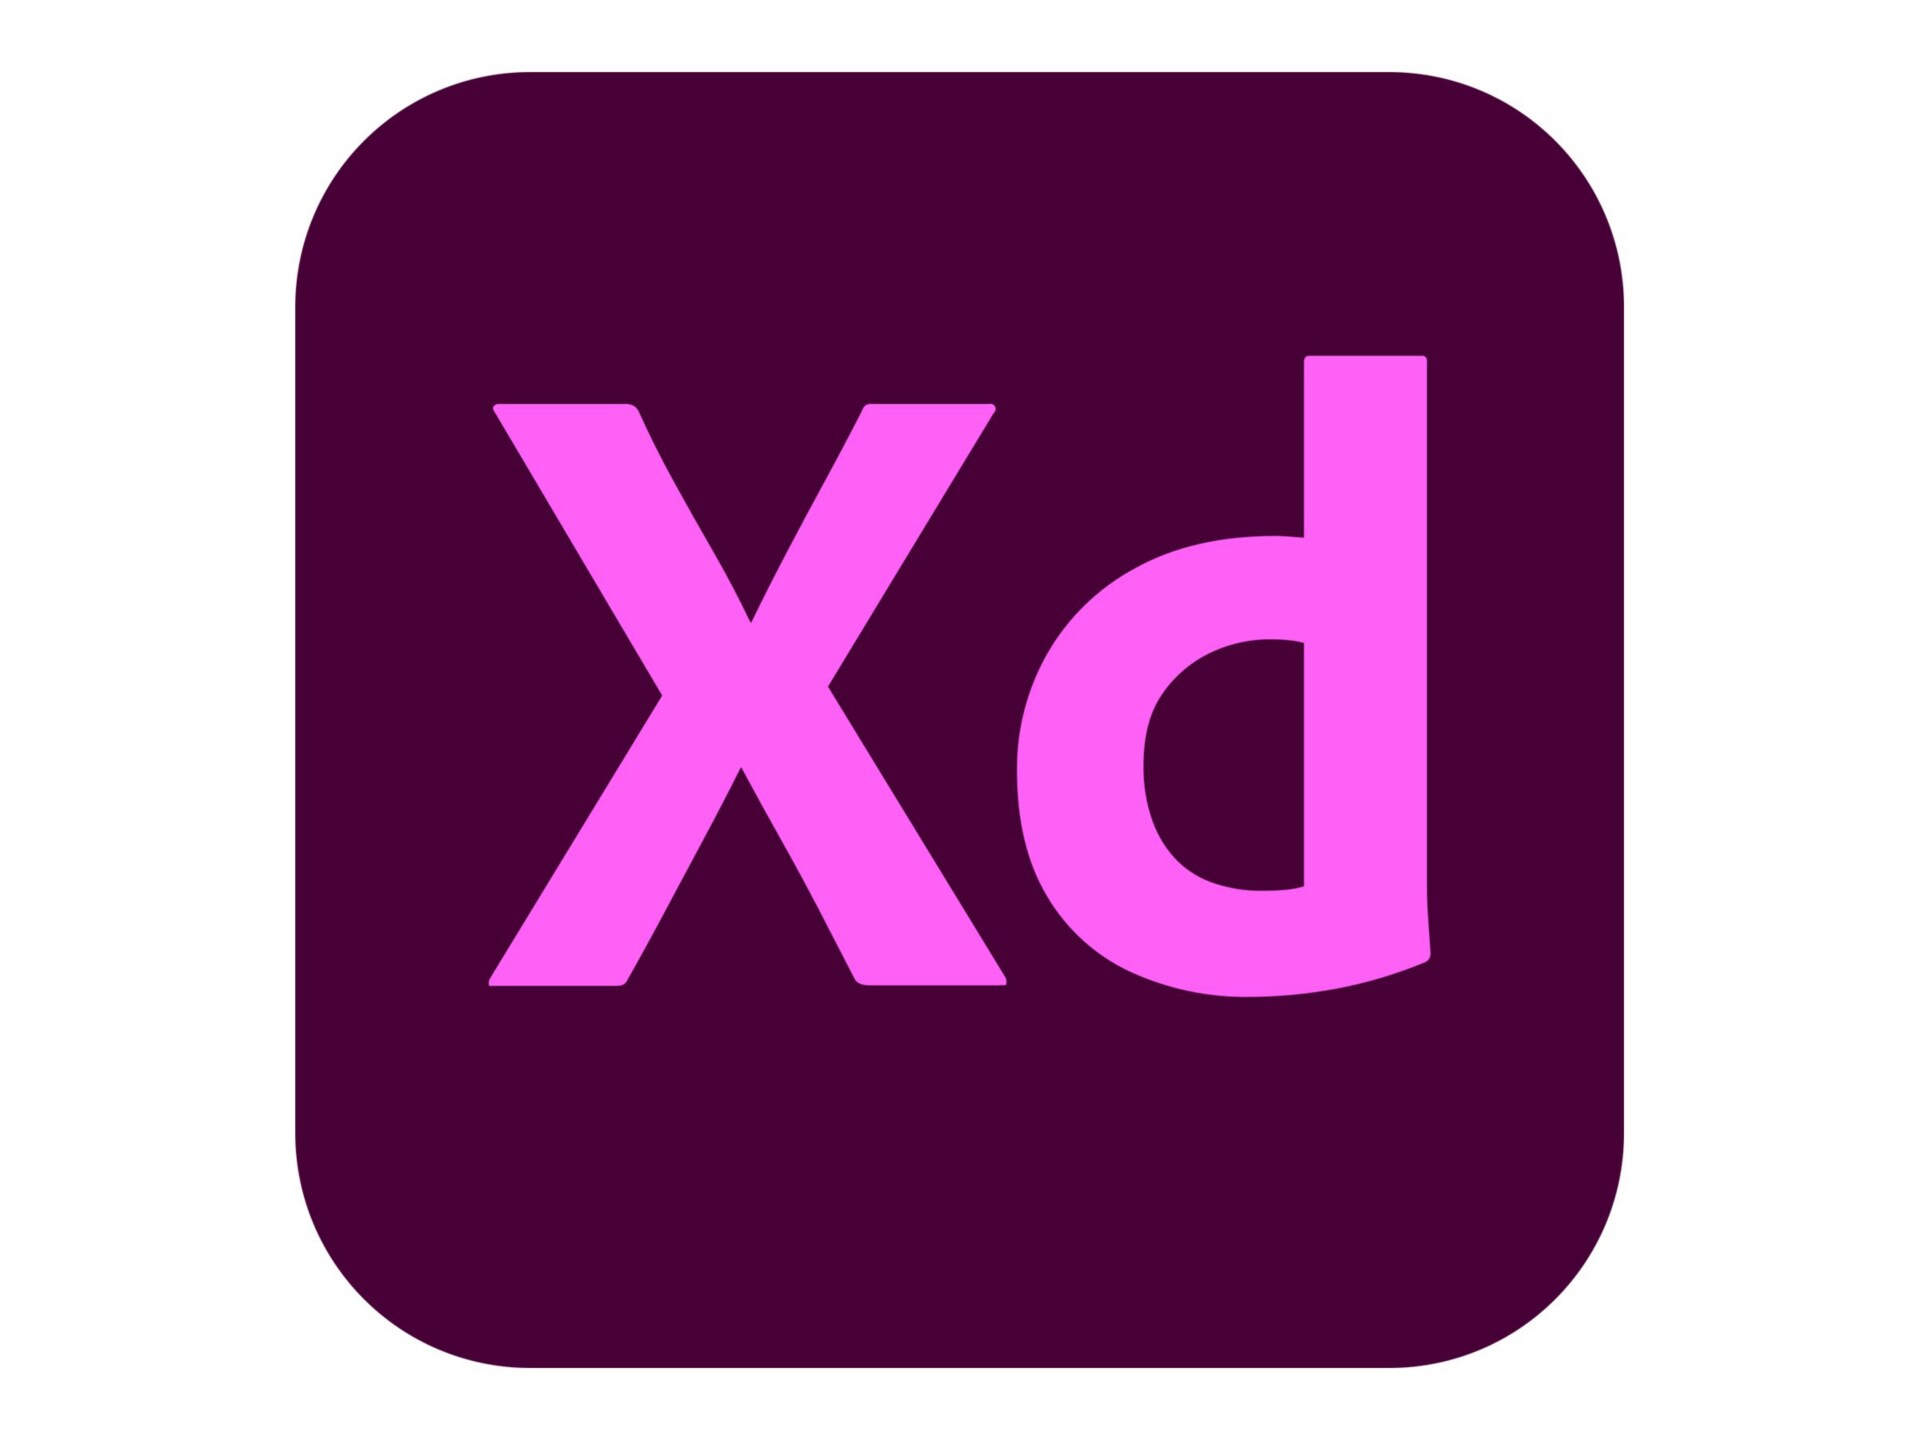 Adobe XD CC for Enterprise - Subscription New (11 months) - 1 named user